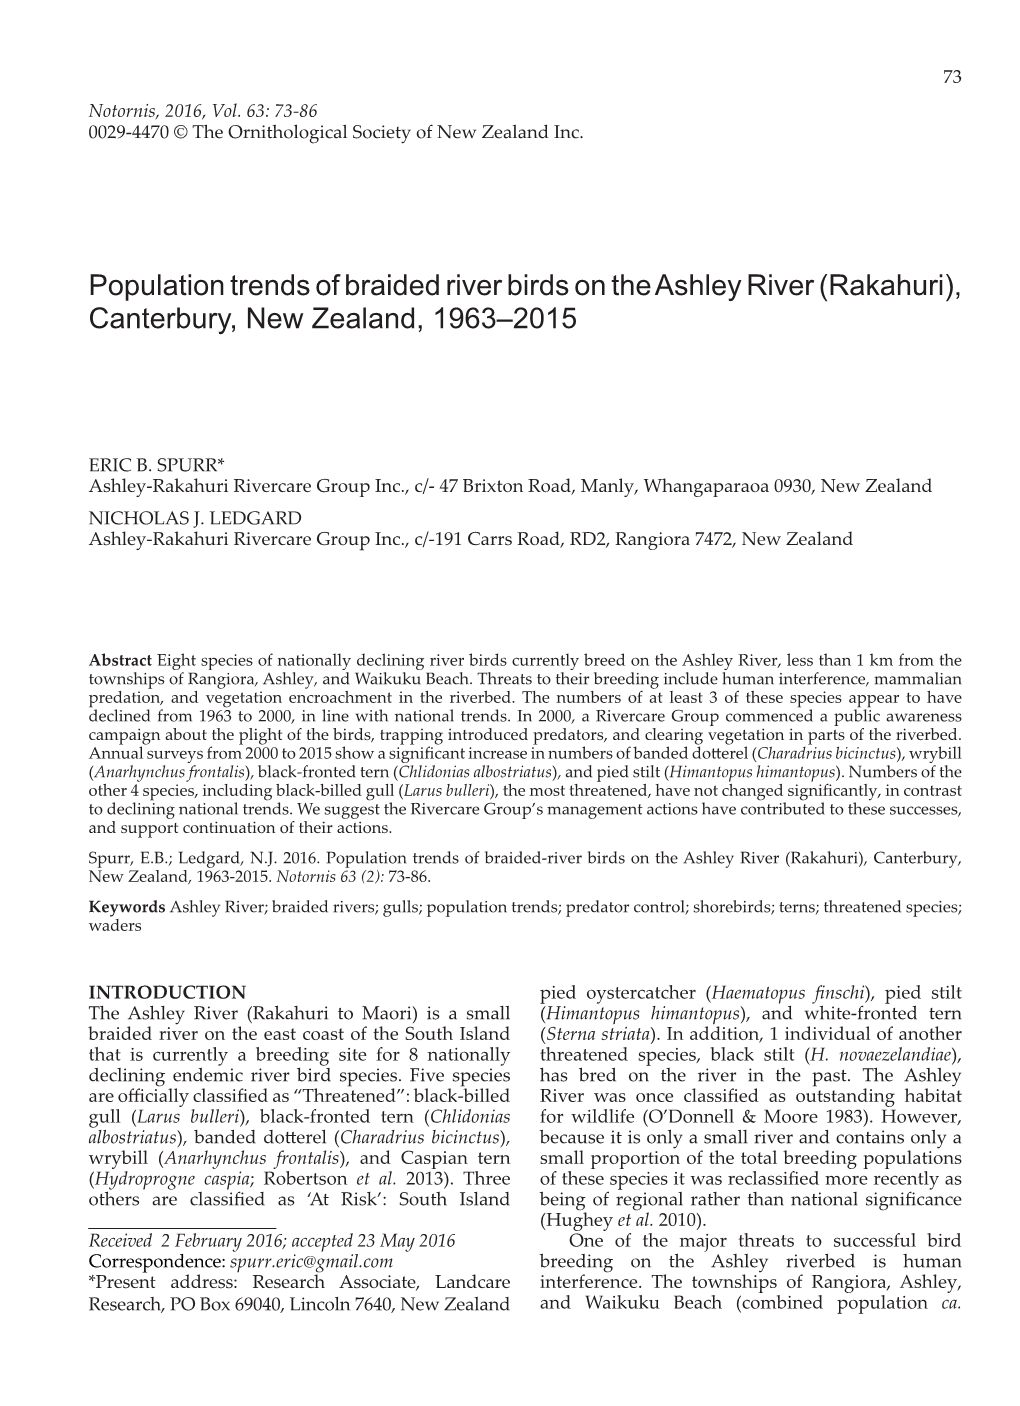 Population Trends of Braided River Birds on the Ashley River (Rakahuri), Canterbury, New Zealand, 1963–2015